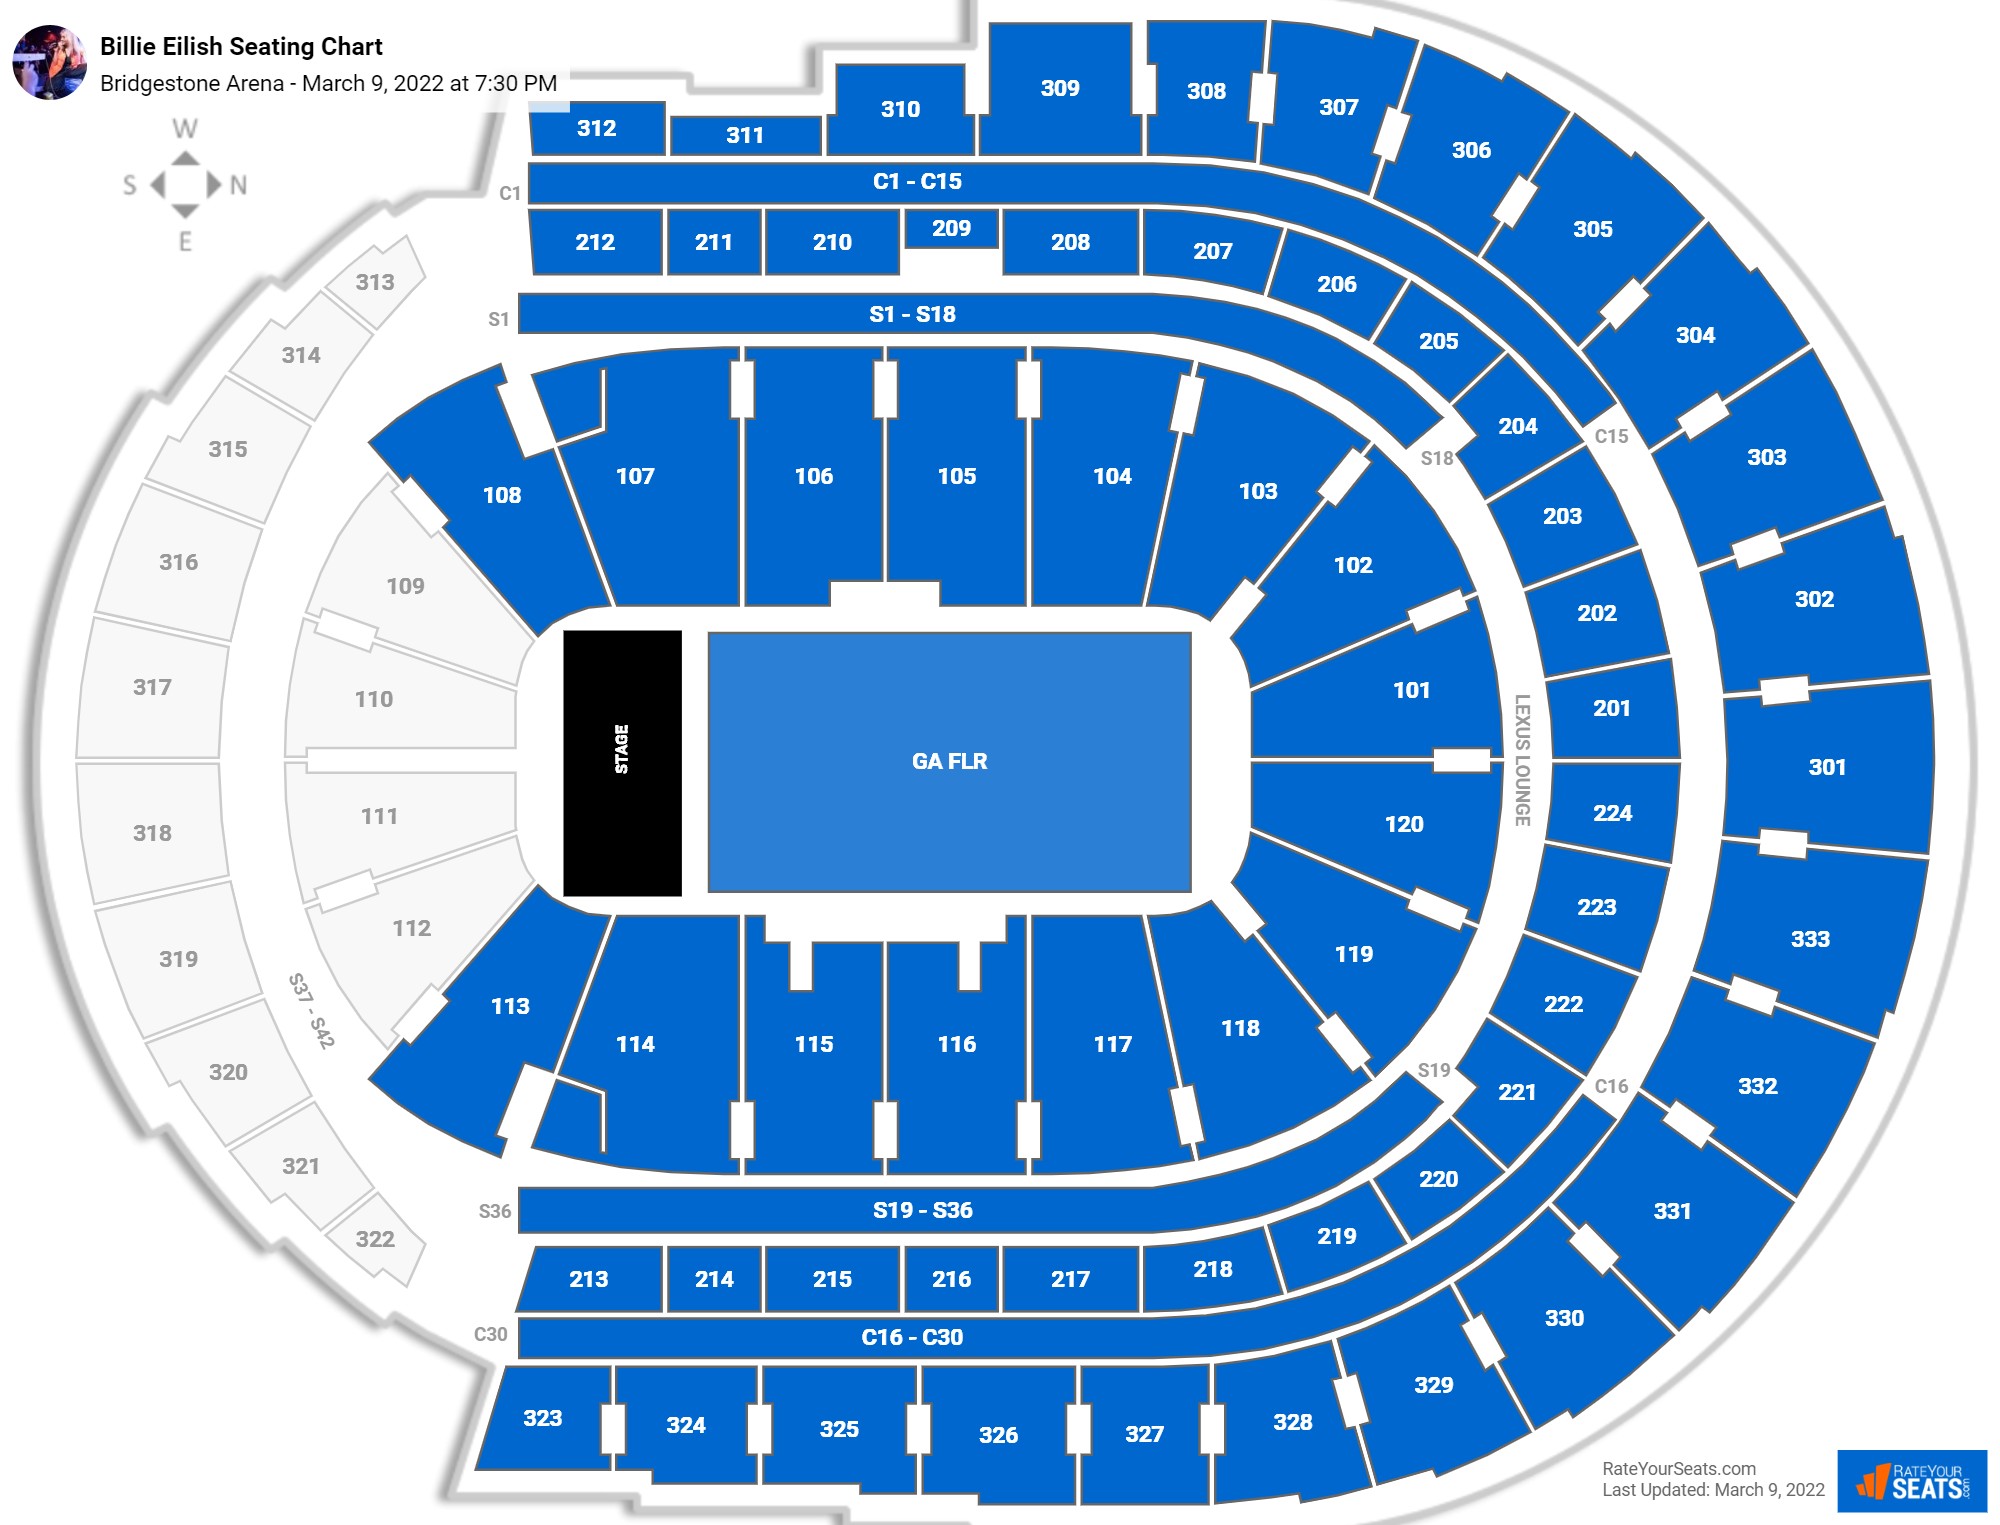 Bridgestone Arena Seating Charts for Concerts